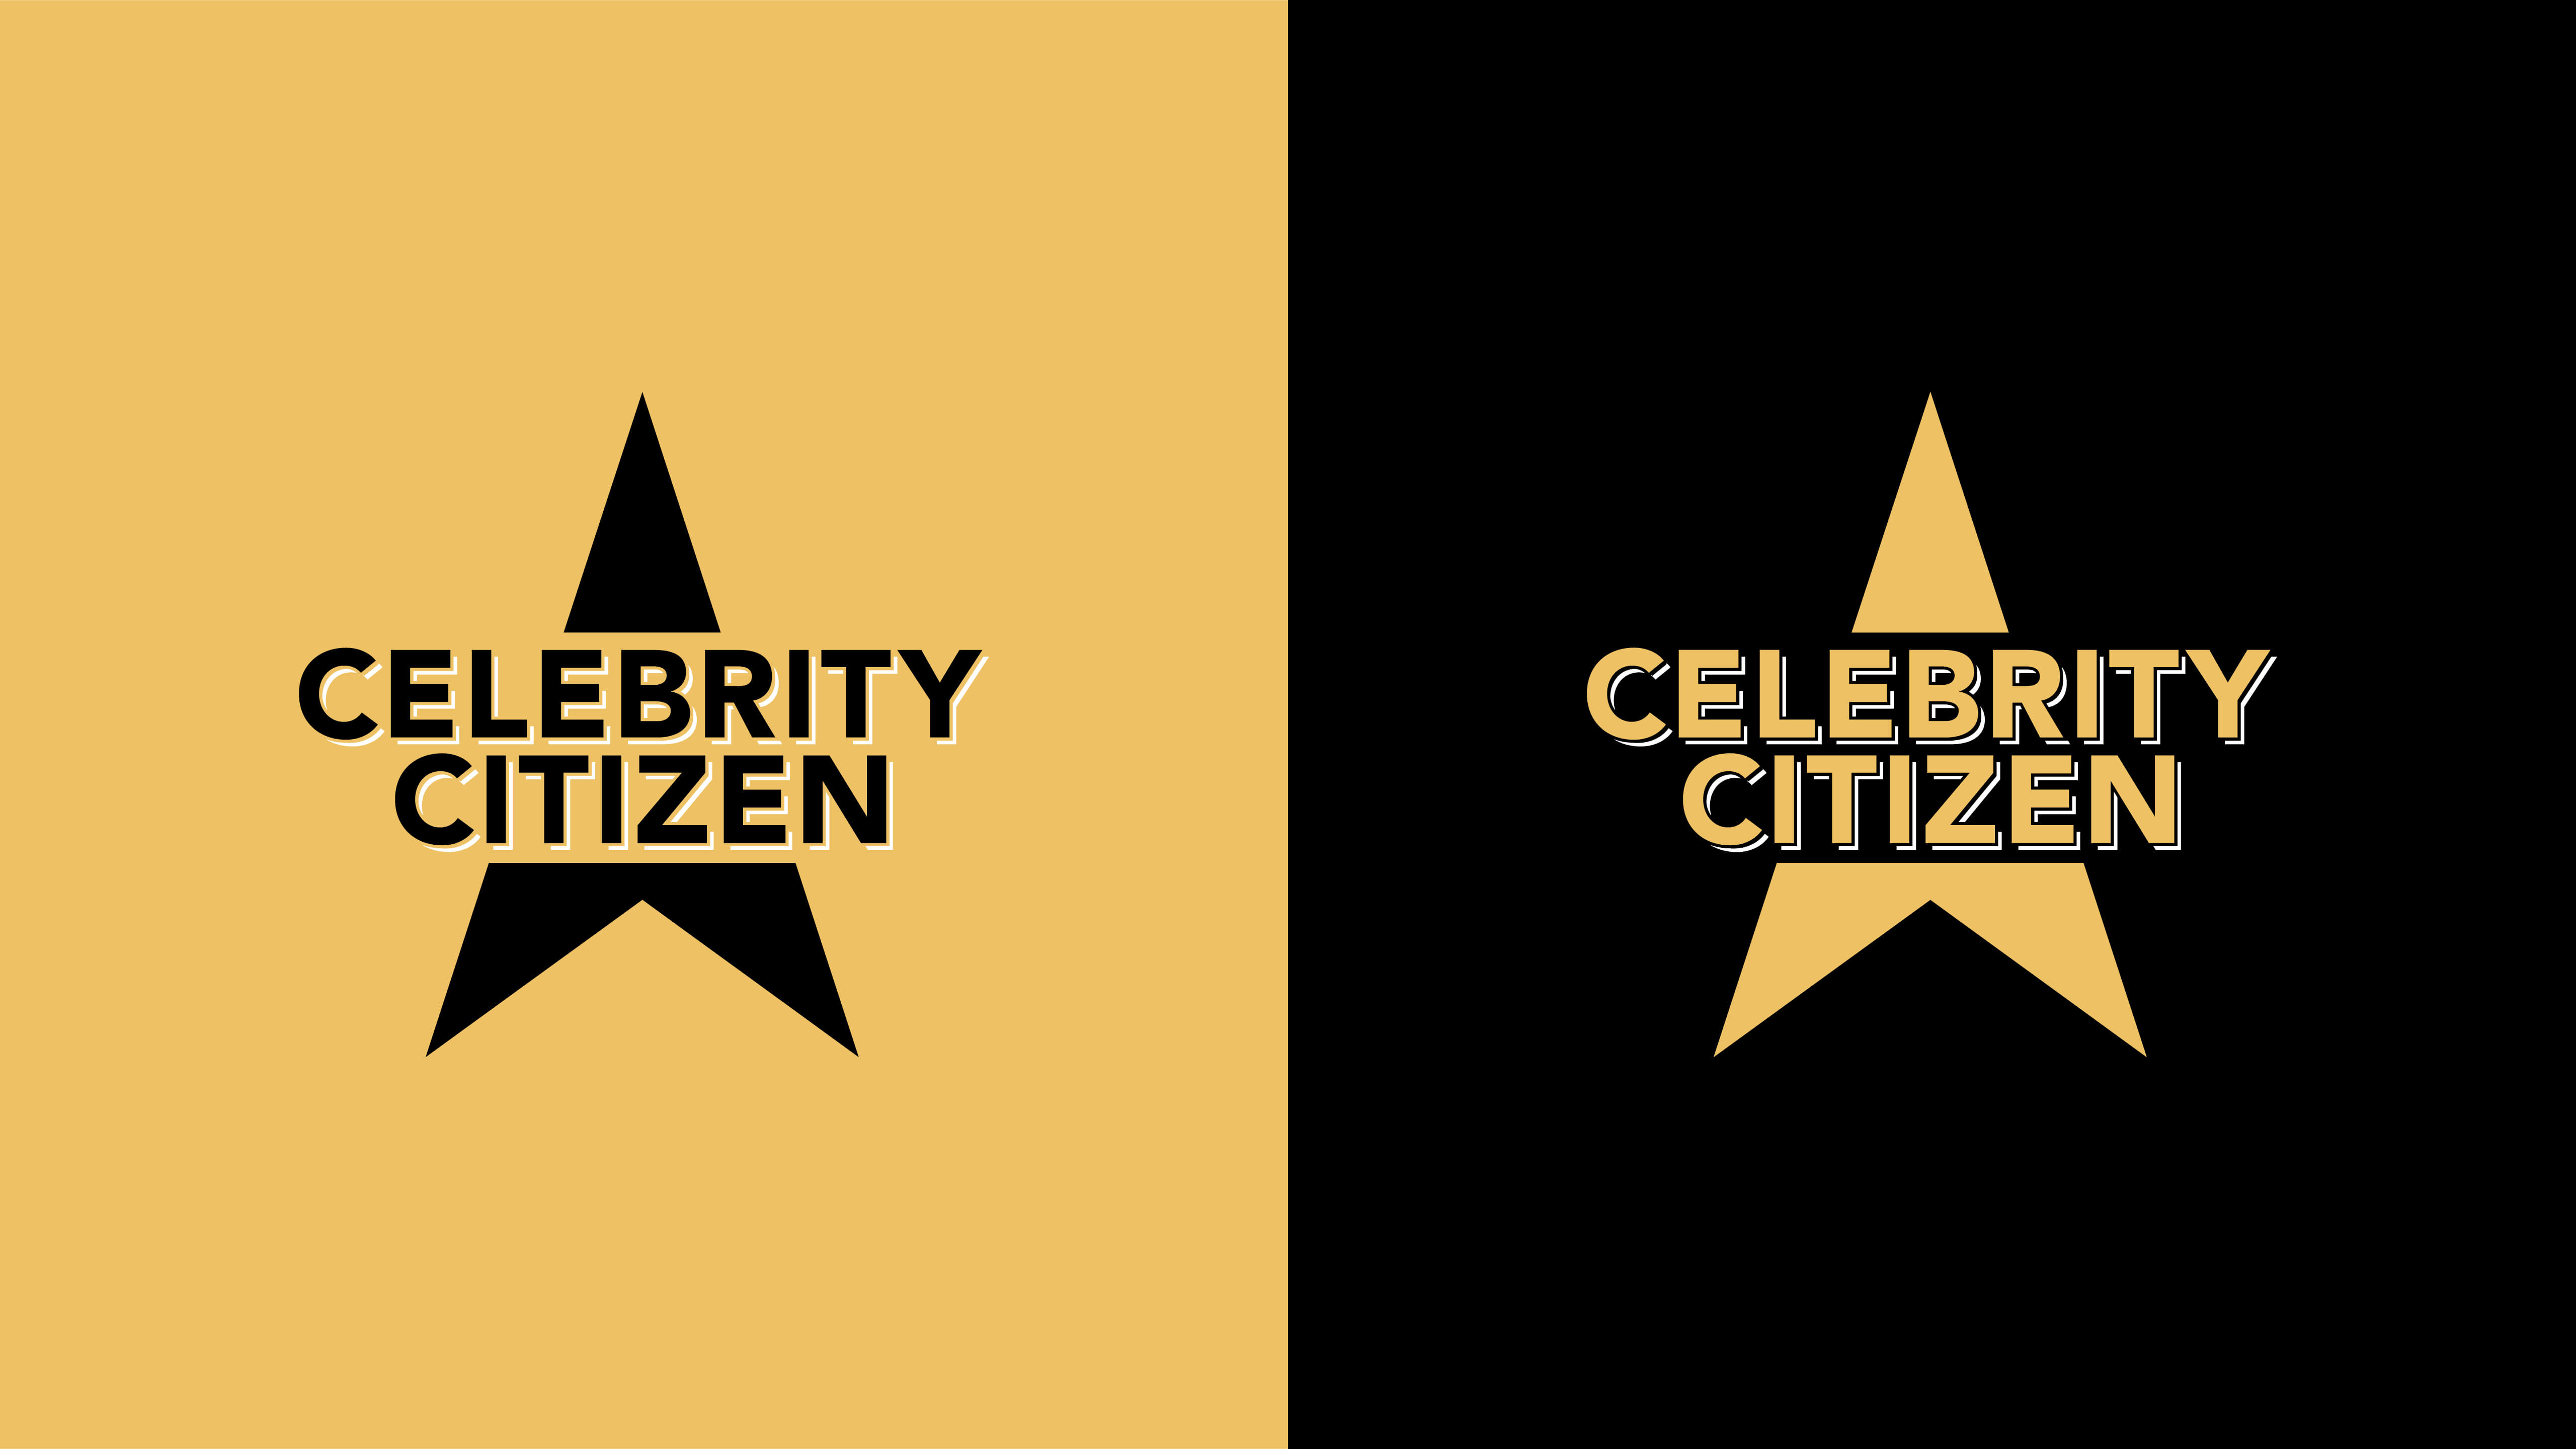 Springfield Convention & Visitors Bureau | Celebrity Citizen Award